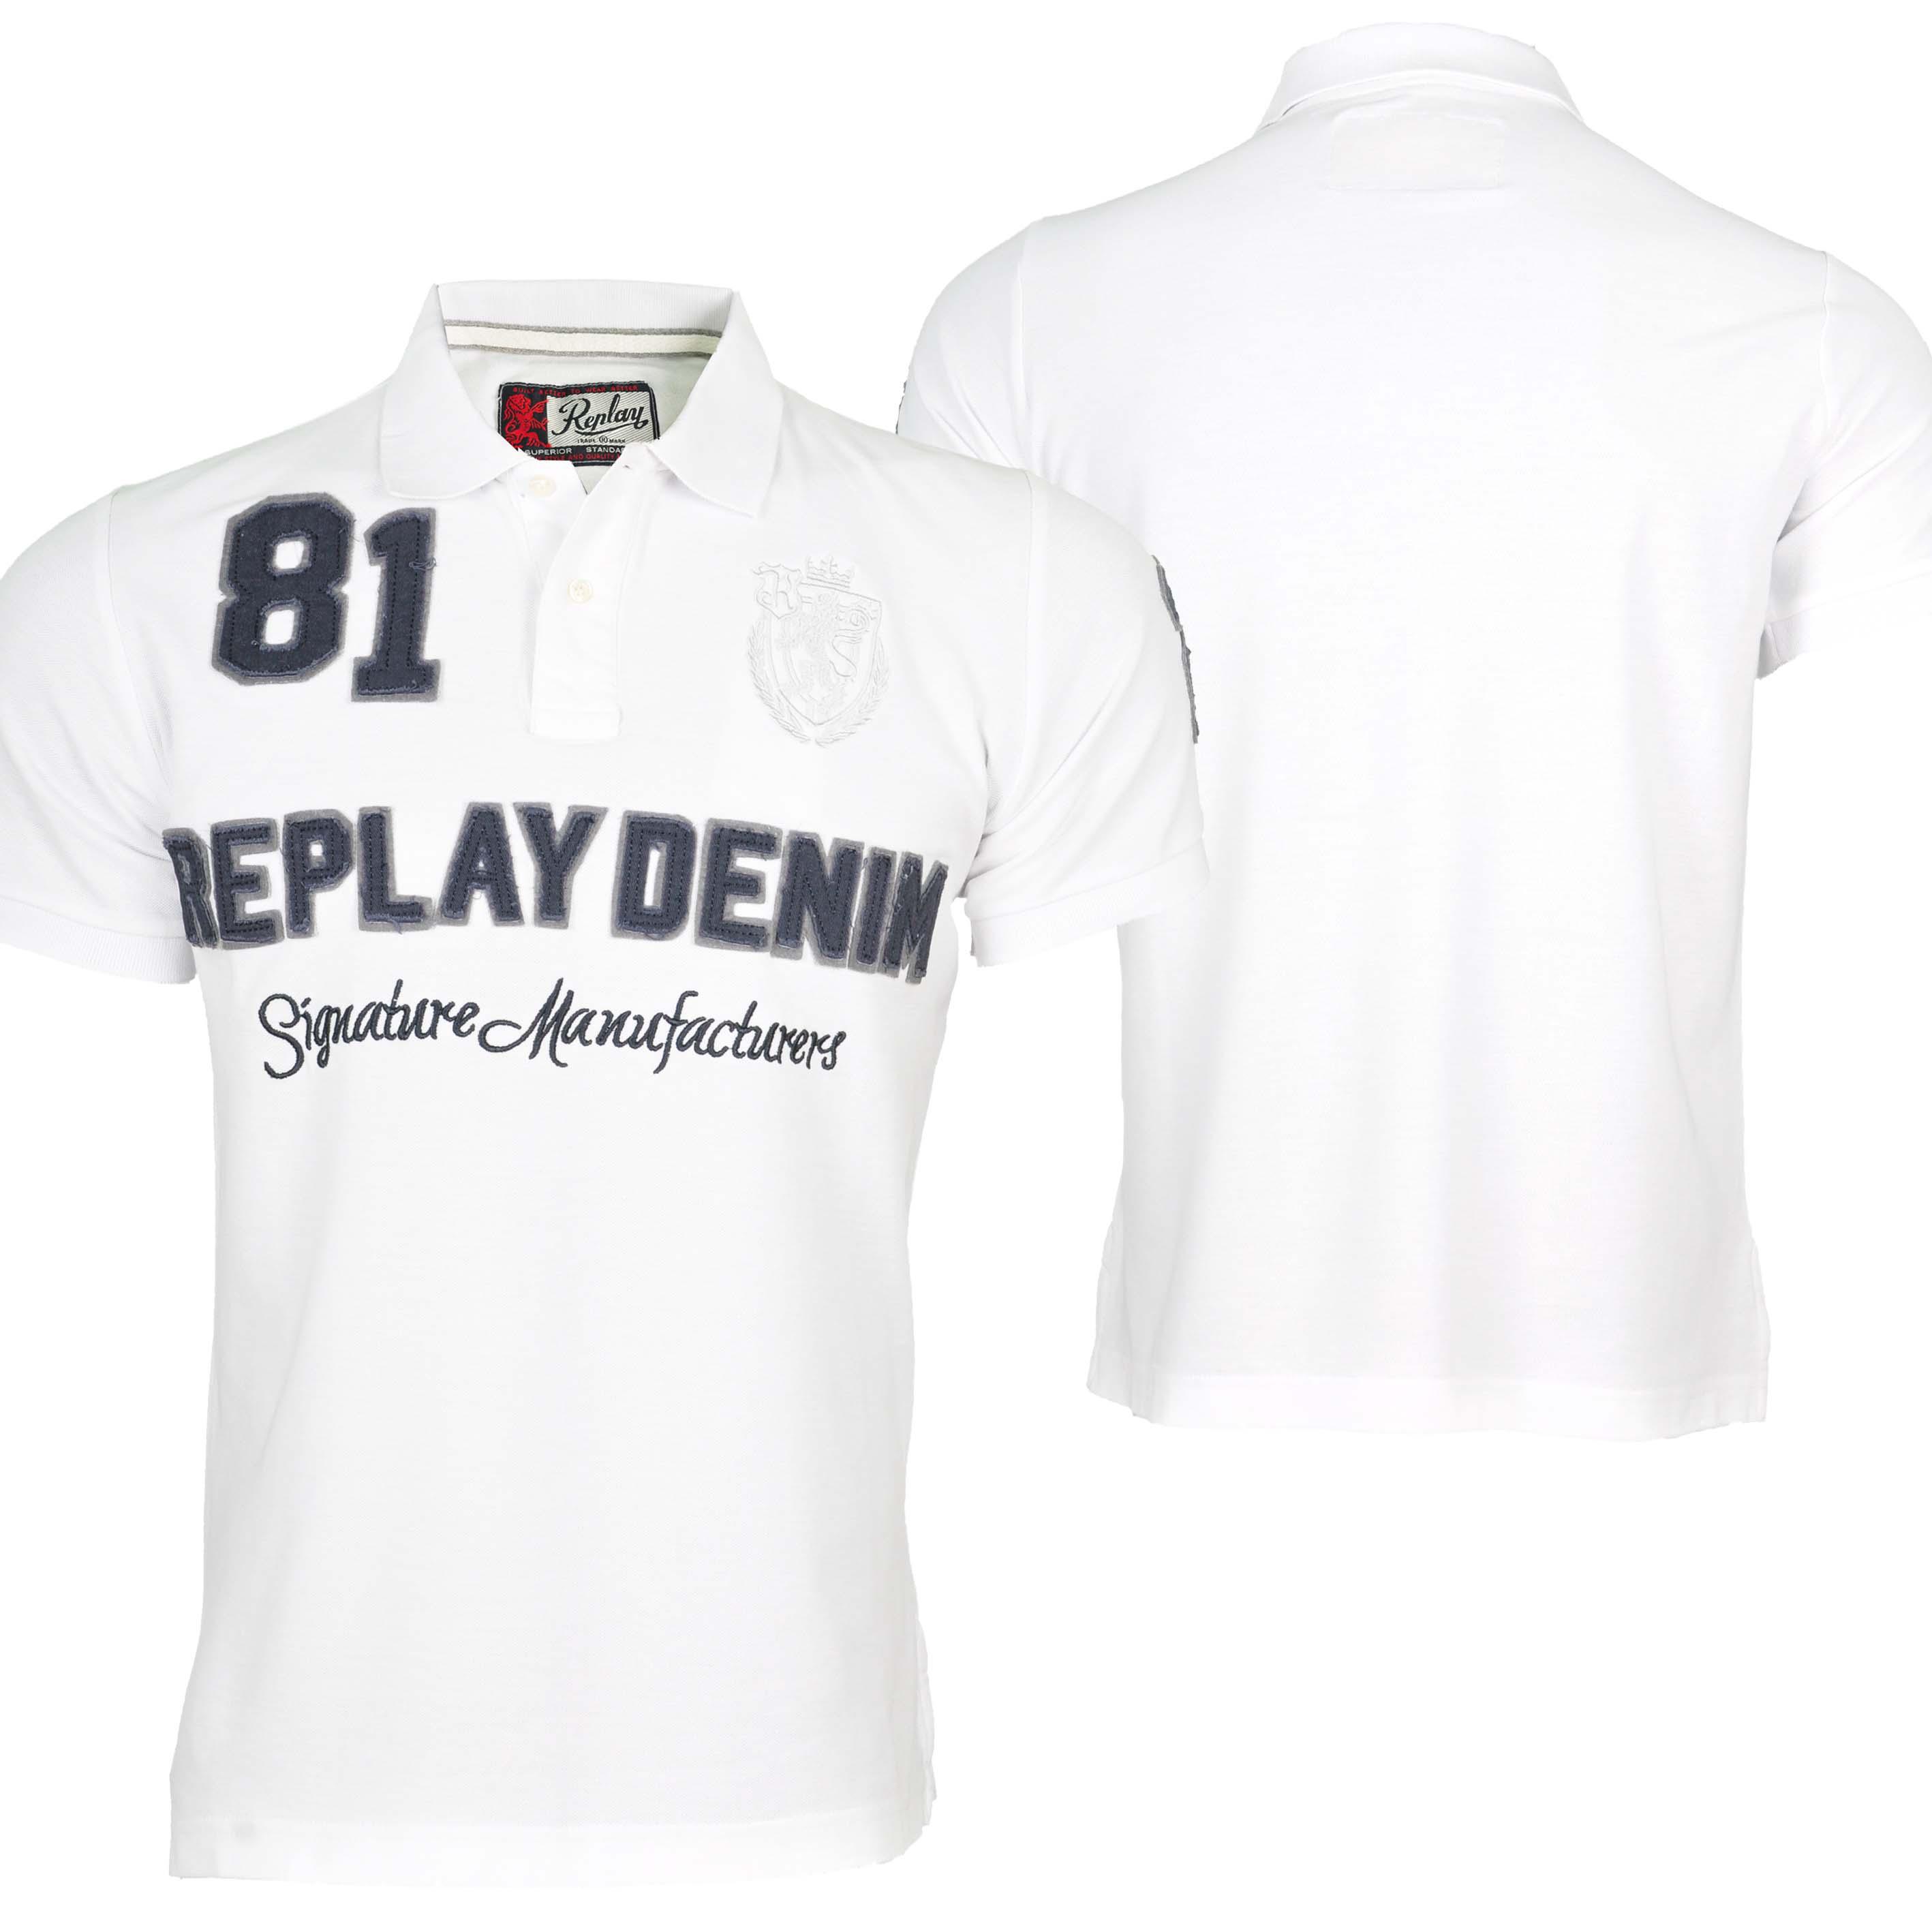 Foto Replay Signature Manufacturers Camiseta Polo Blanco